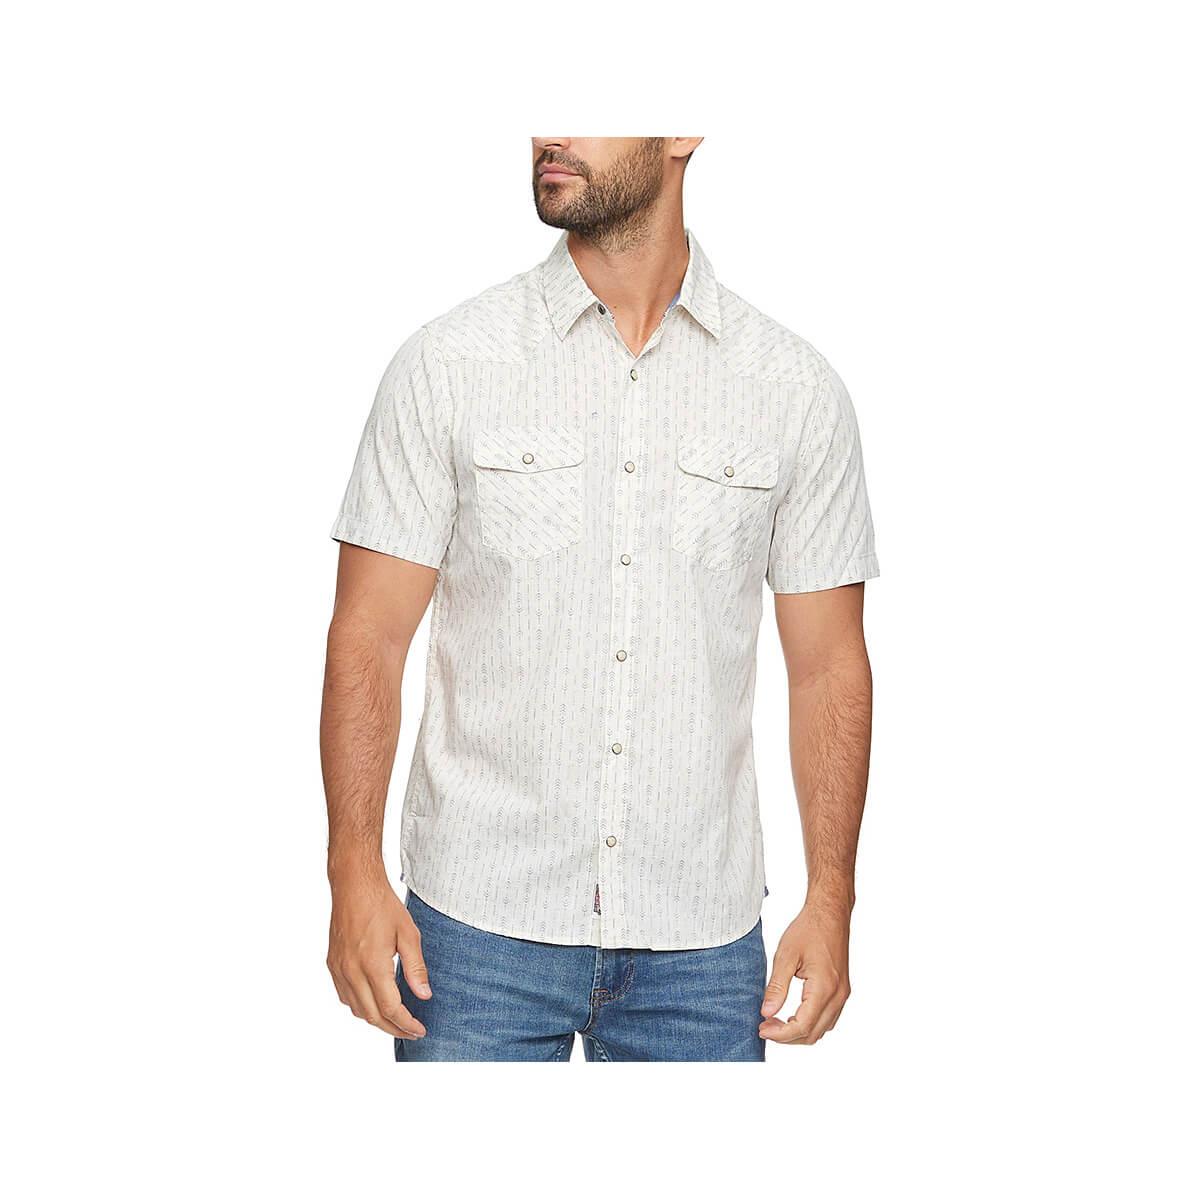  Men's Taos Southwestern Print Short Sleeve Shirt